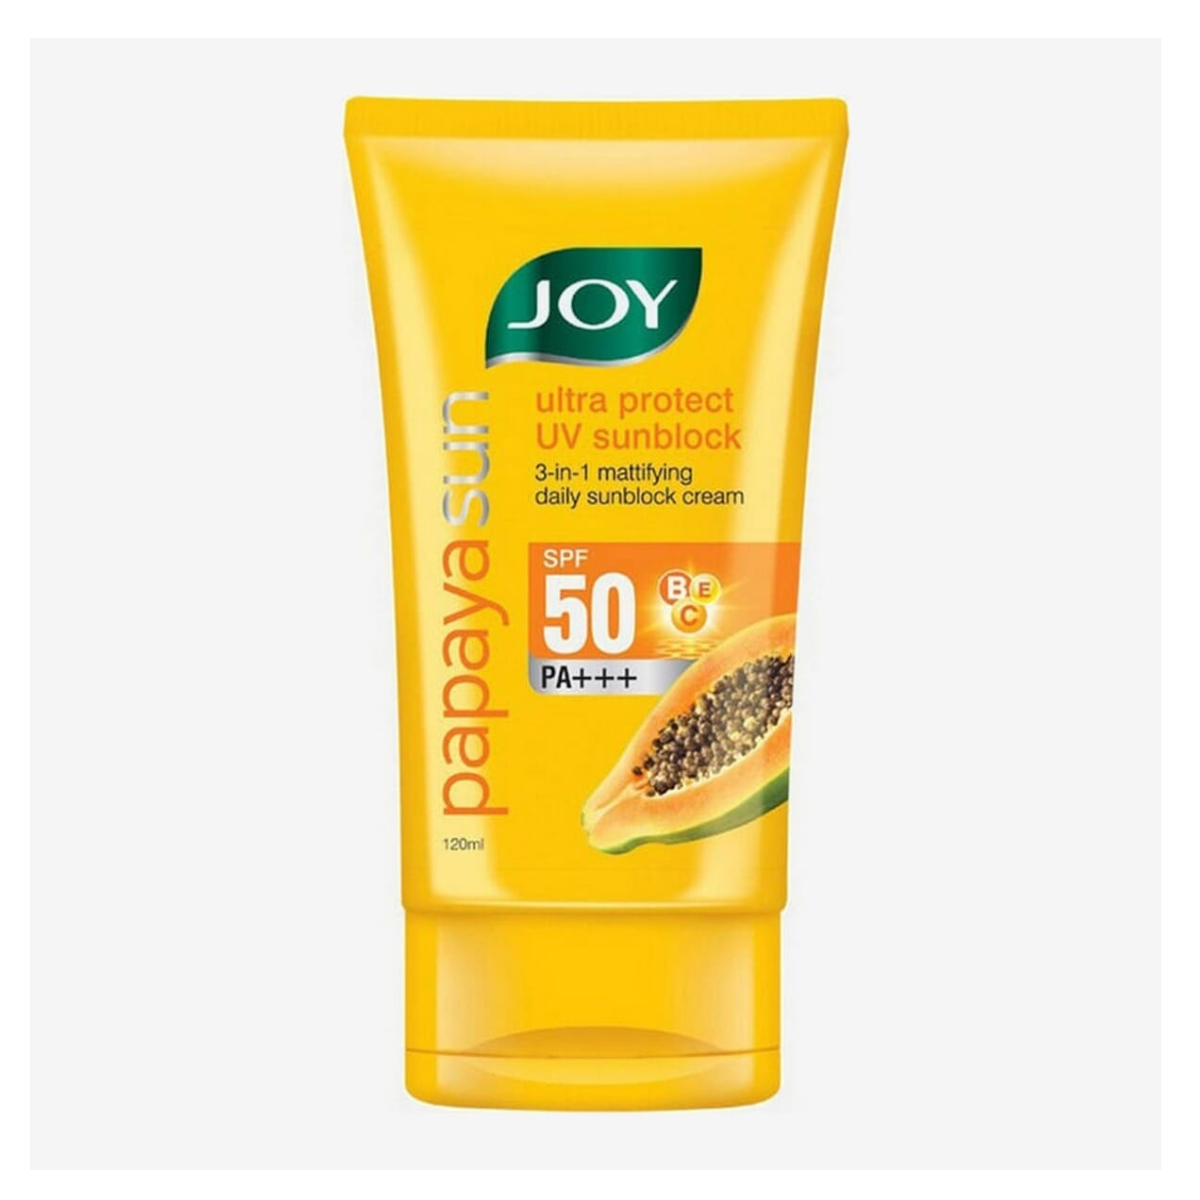 Joy Papaya Sunscreen - Ultra Protect UV - 3 In 1 Mattifying Daily Sunblock Cream - PA+++ SPF 50 - 120ml